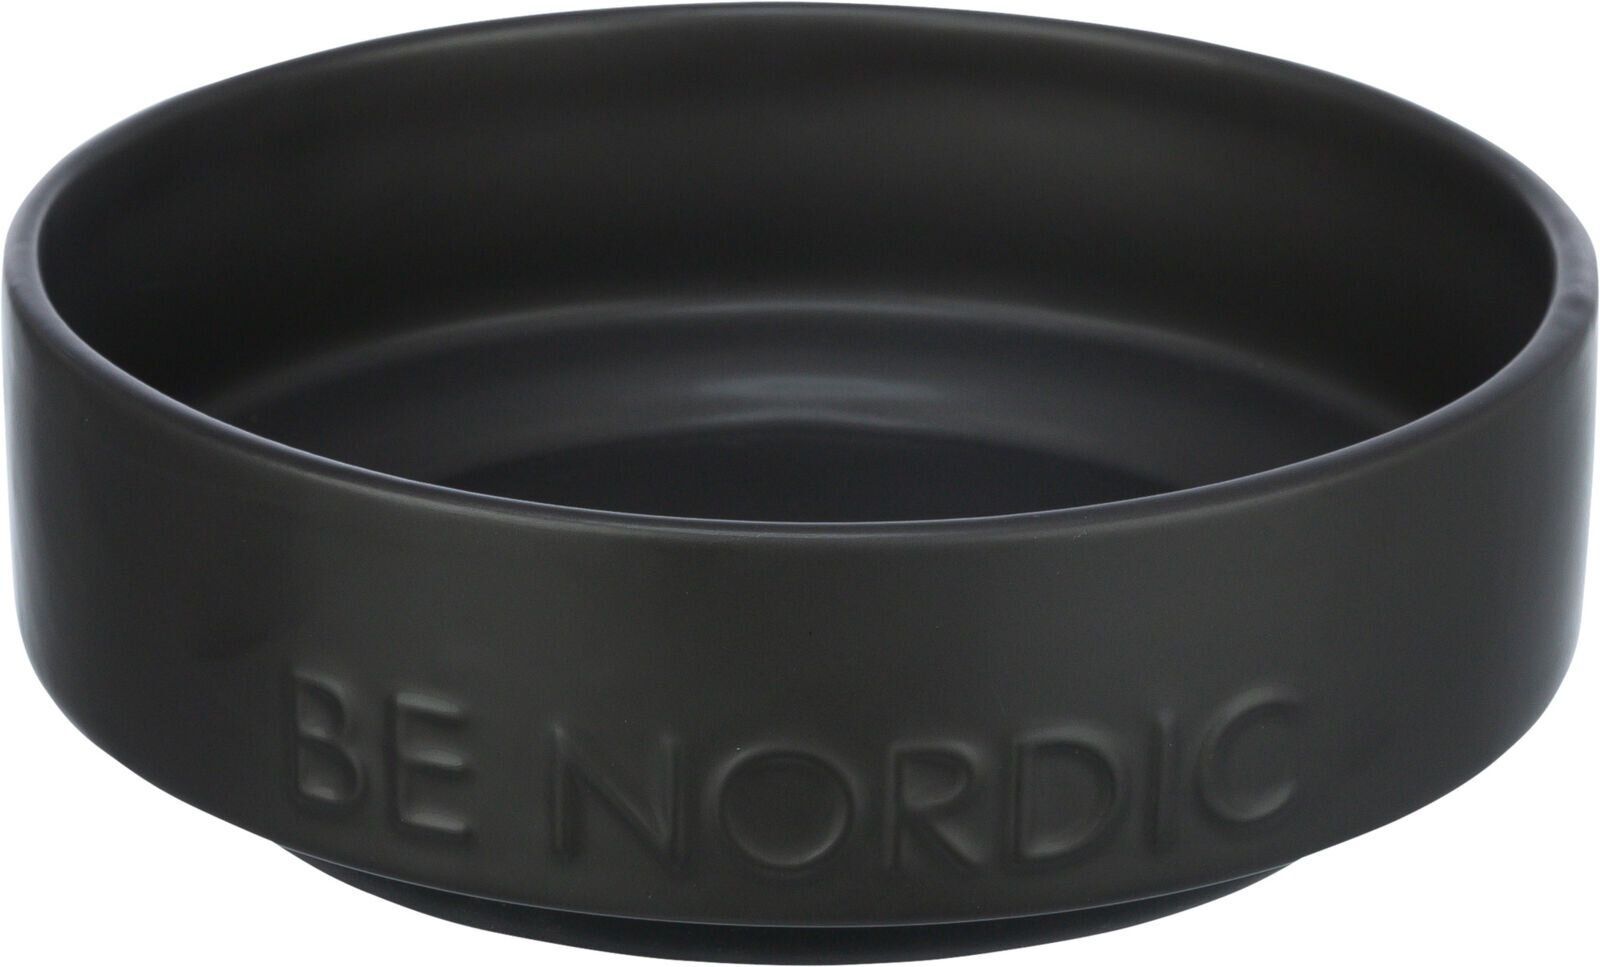 BE NORDIC keramická miska, 0.5l / 16 cm, černá TRIXIE